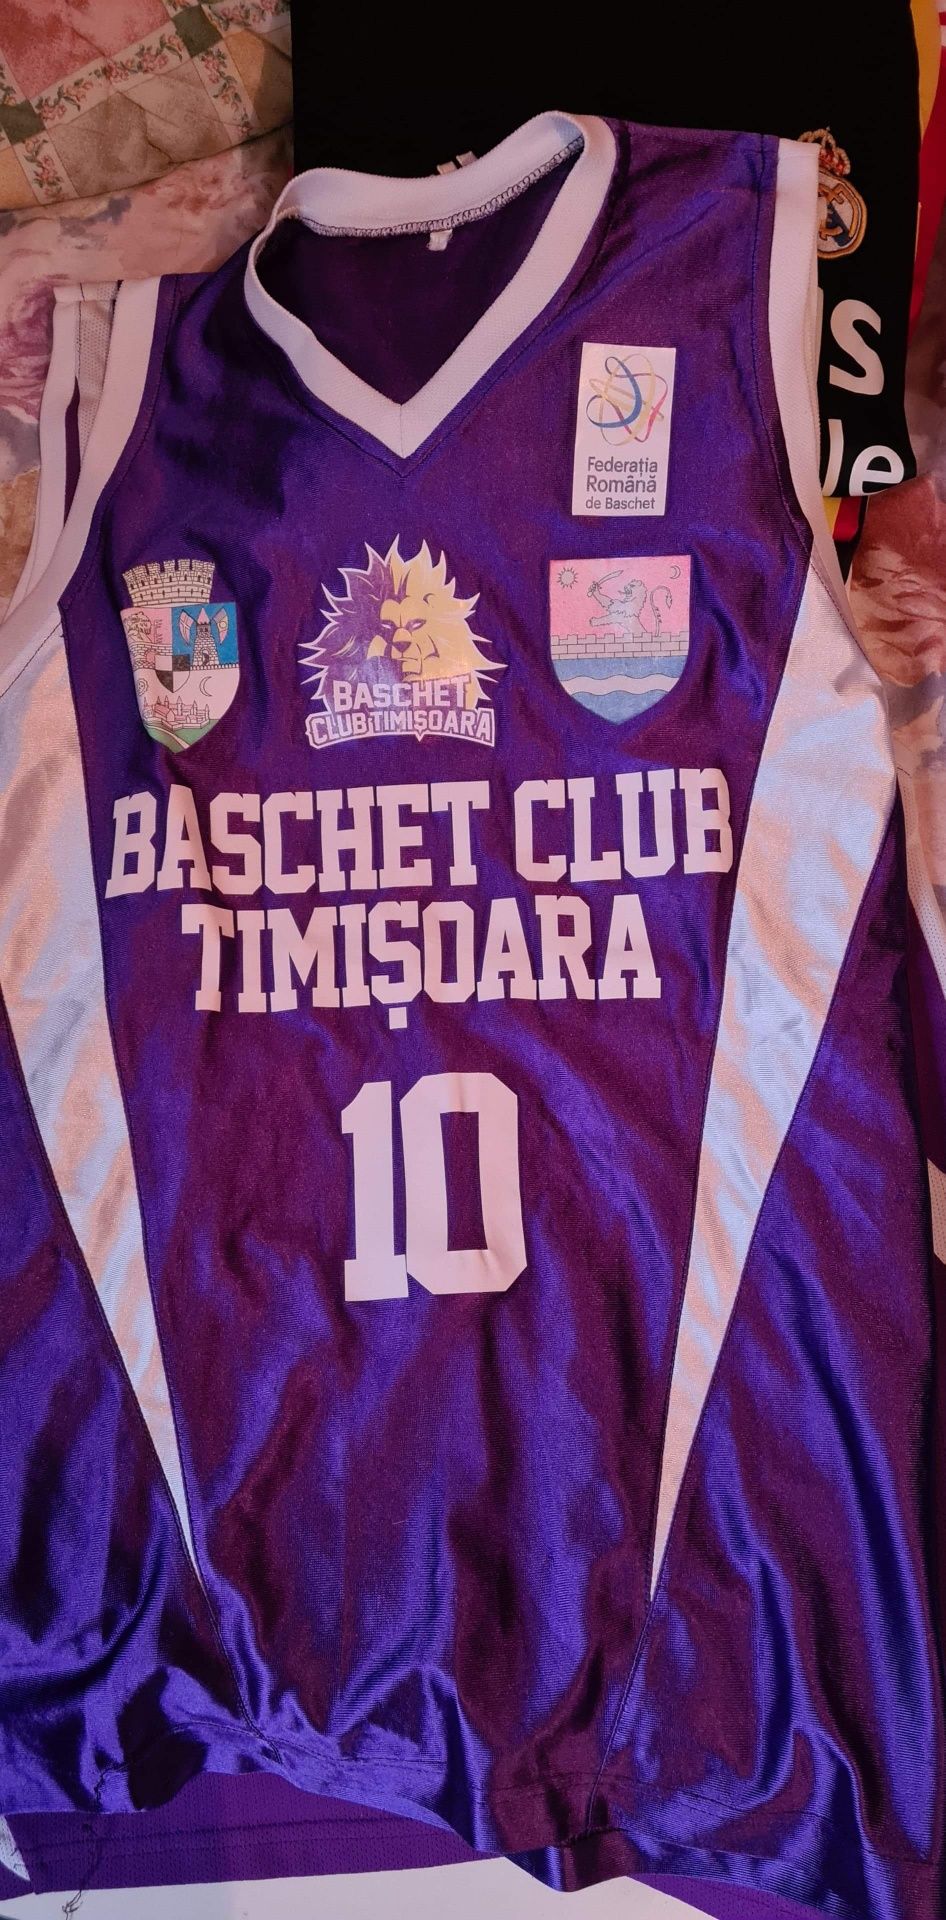 Tricouri/Maiouri oficiale ale jucatorilor BC Timisoara.